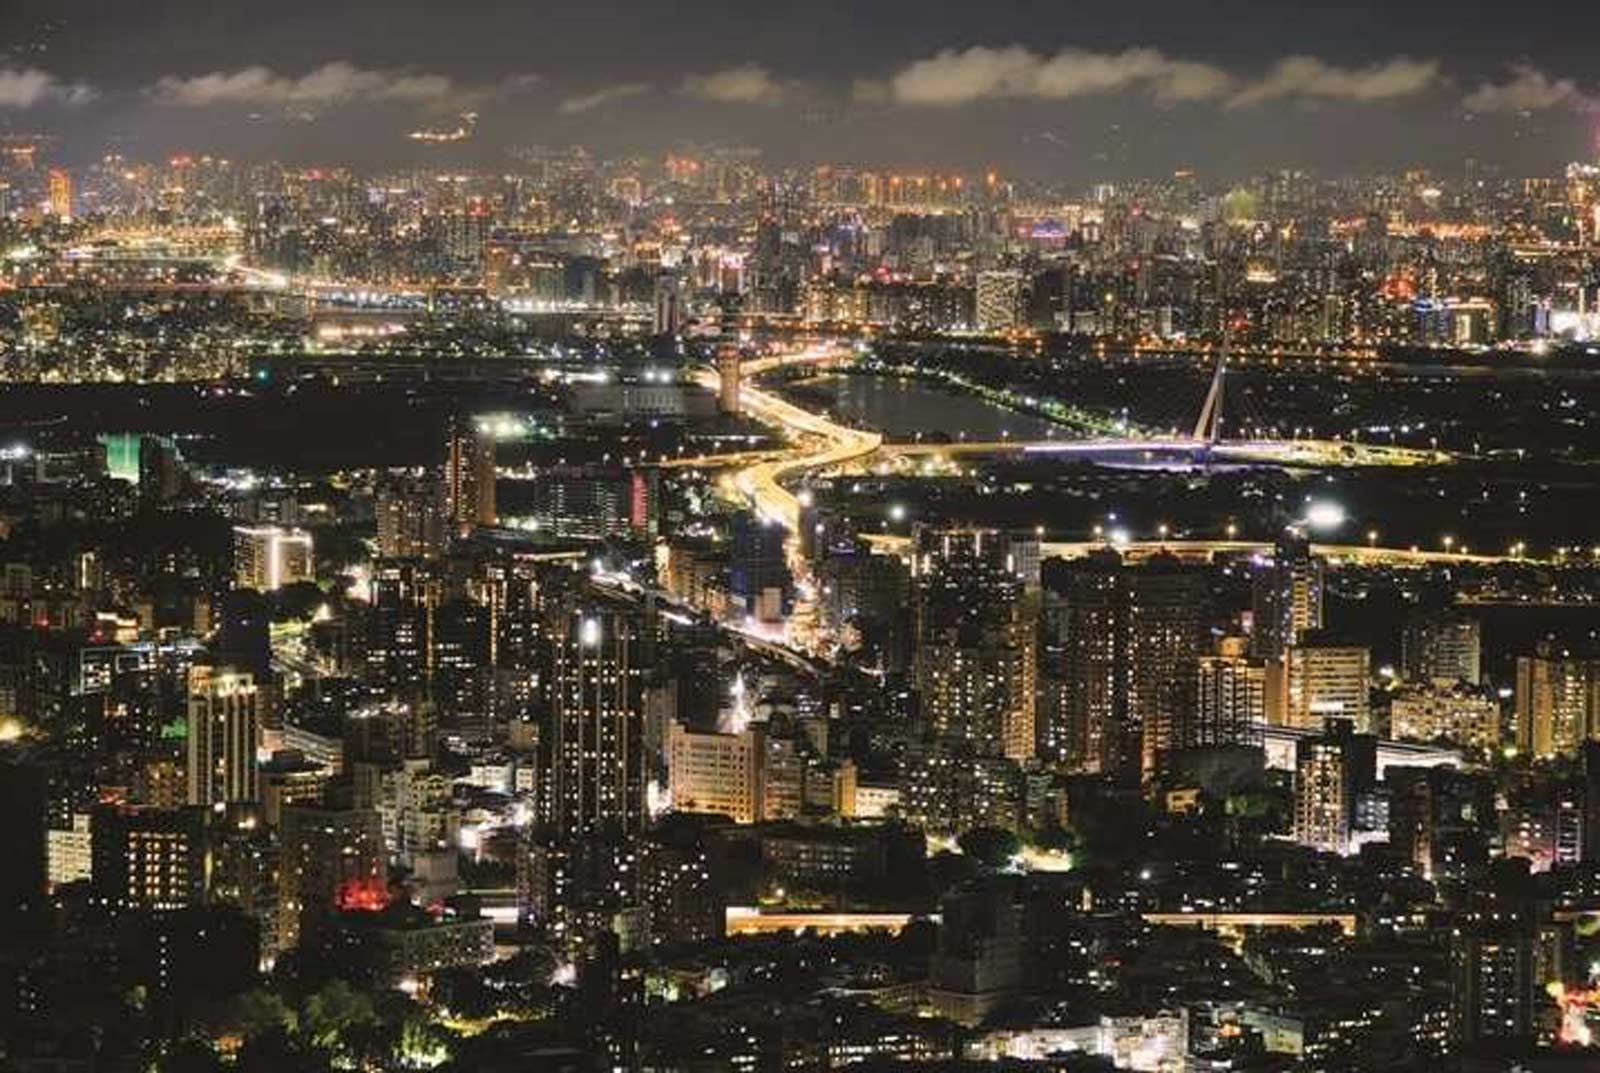 City of light: Six night scenes in Taipei